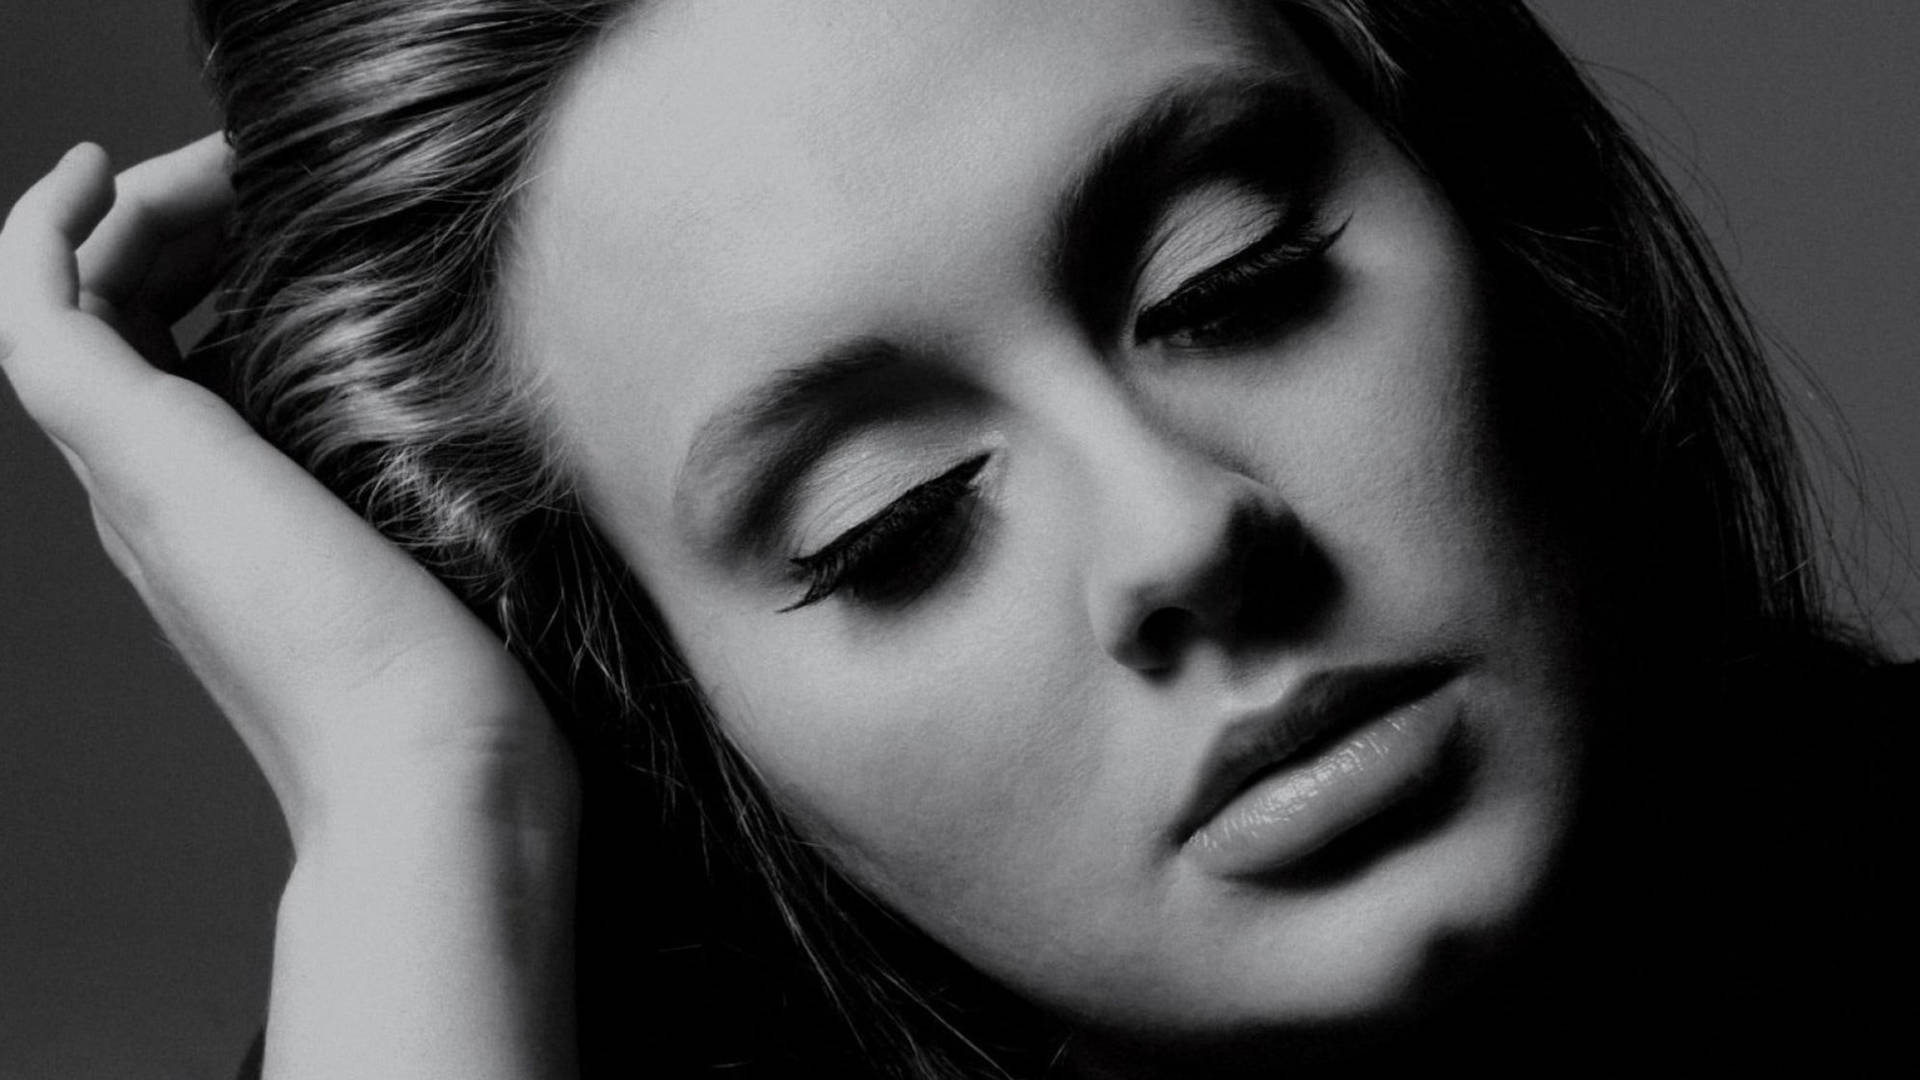 Adele 21 Album Cover Background